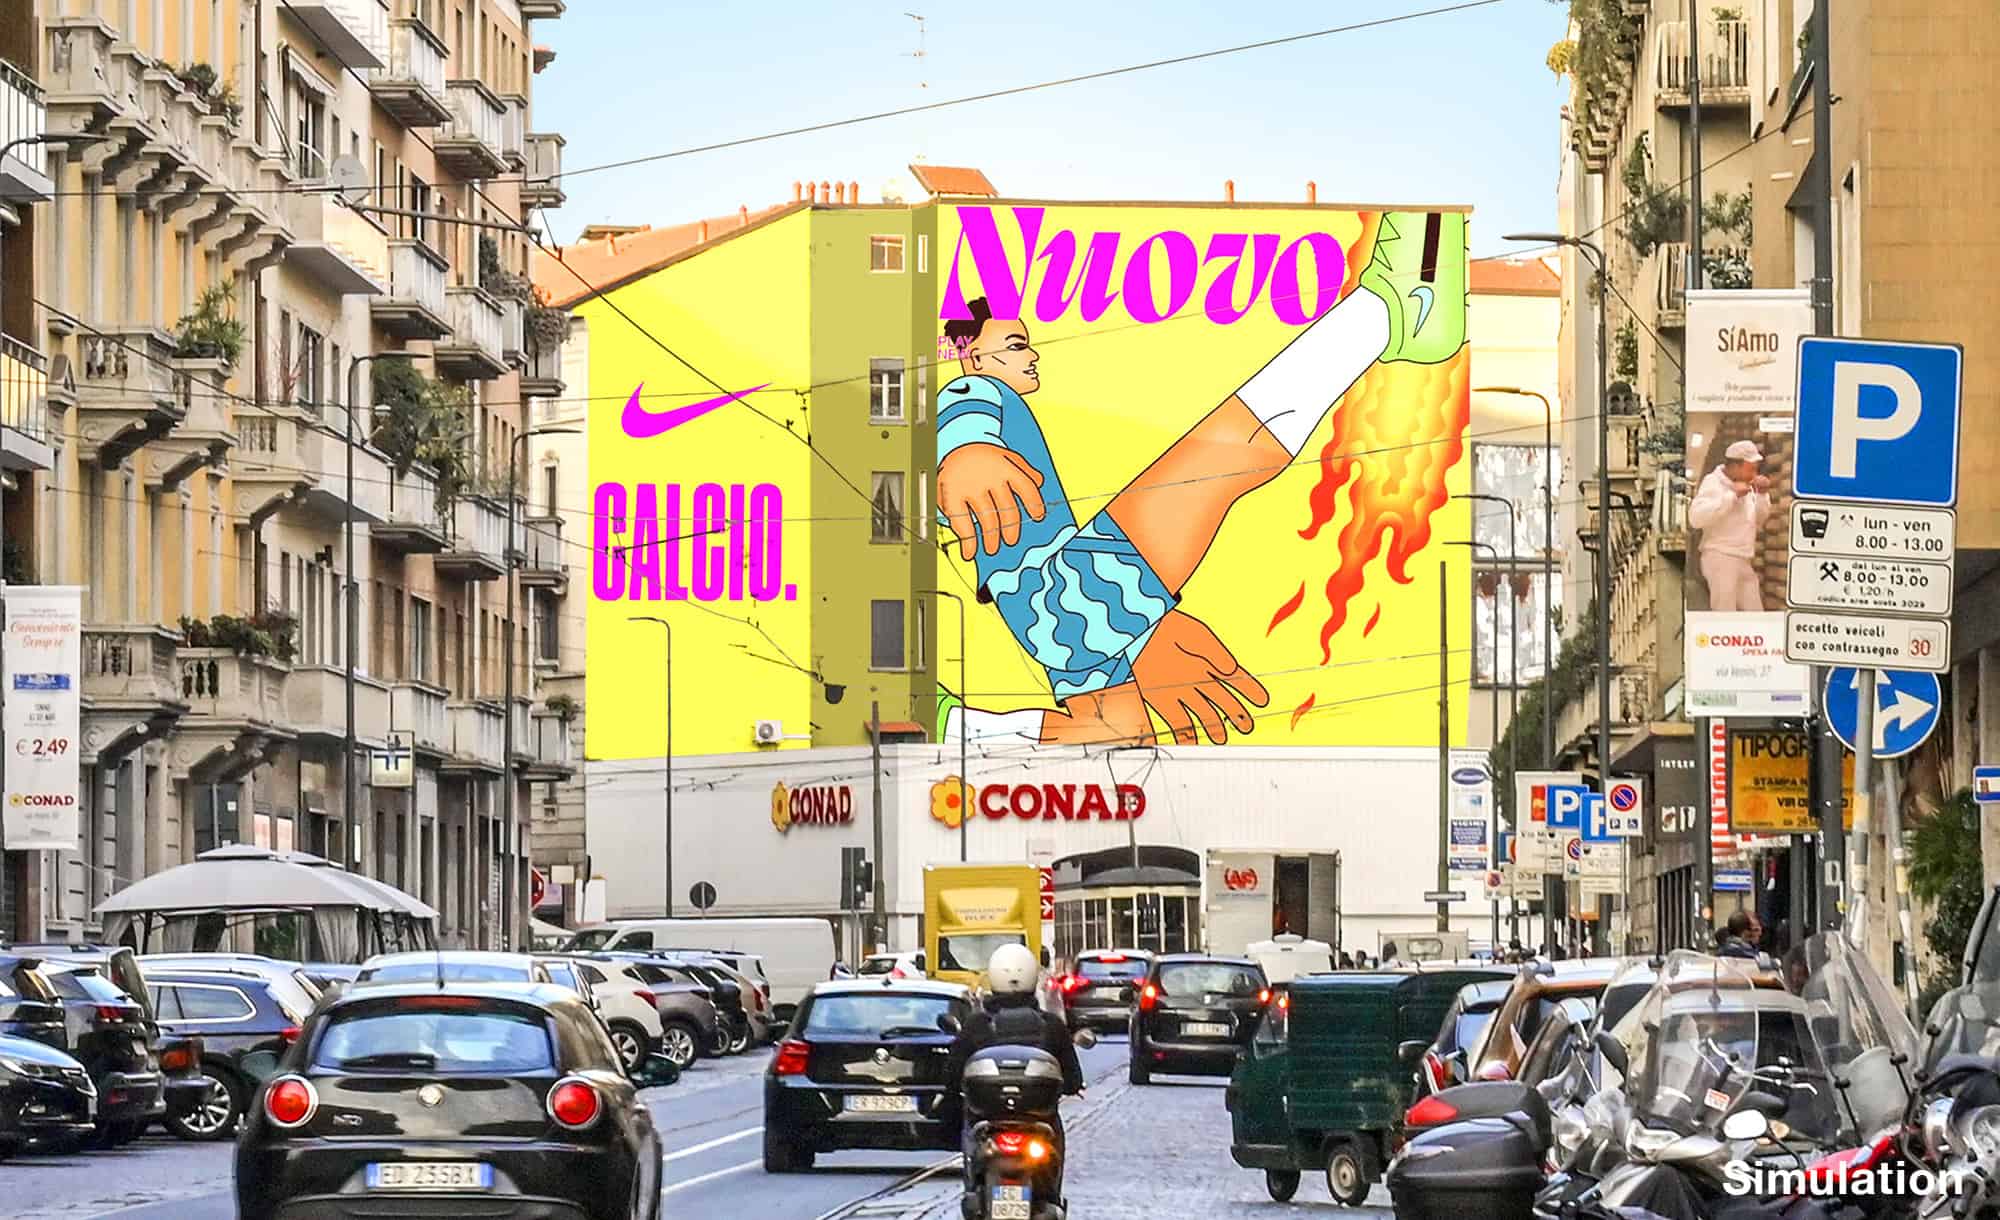 Mural Nolo in Milan by Streetvox